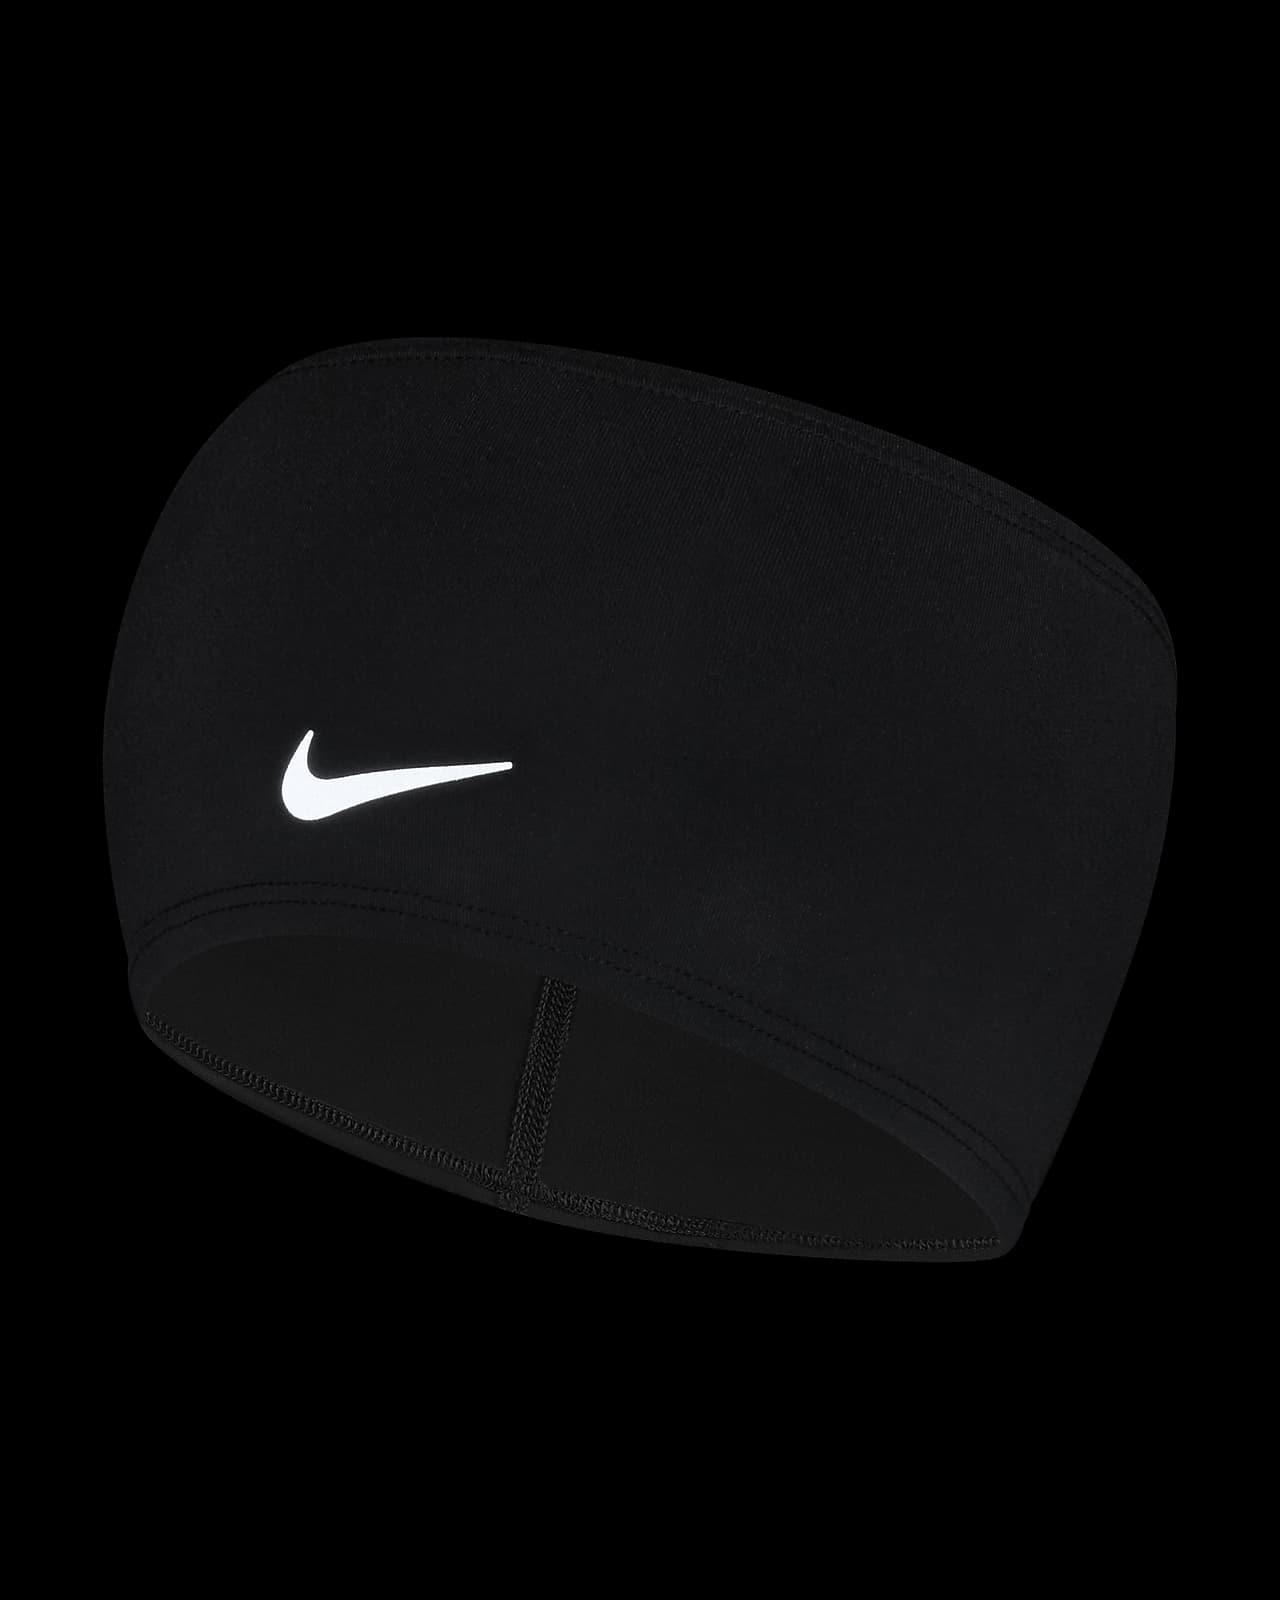 Oponerse a sitio Rebajar Nike Dri-FIT Swoosh Headband 2.0. Nike LU